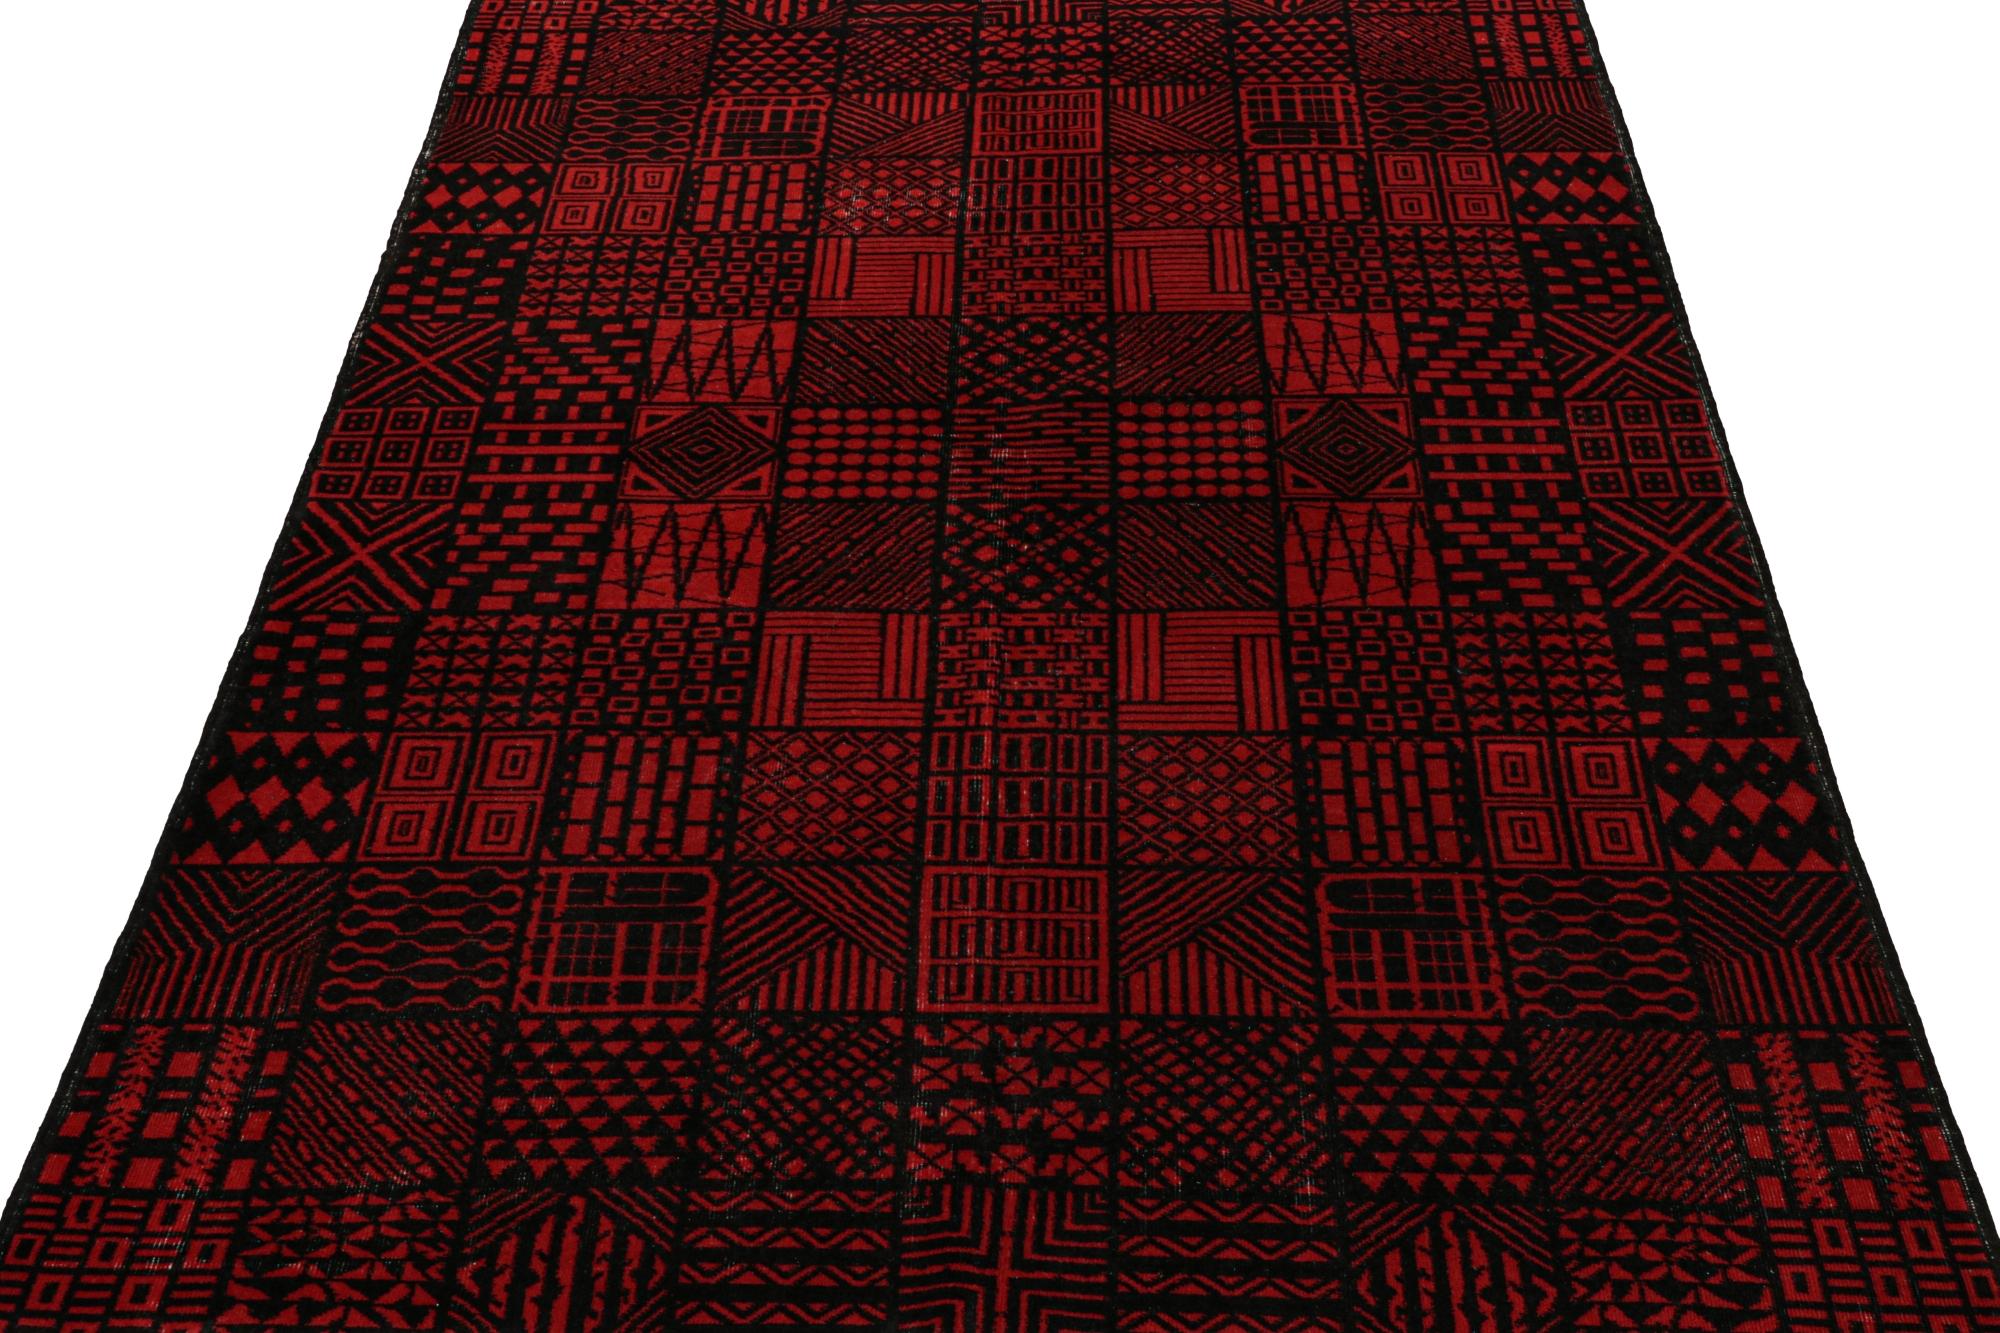 Hand-Knotted Vintage Zeki Müren Rug in Red & Black Geometric Patterns, by Rug & Kilim For Sale